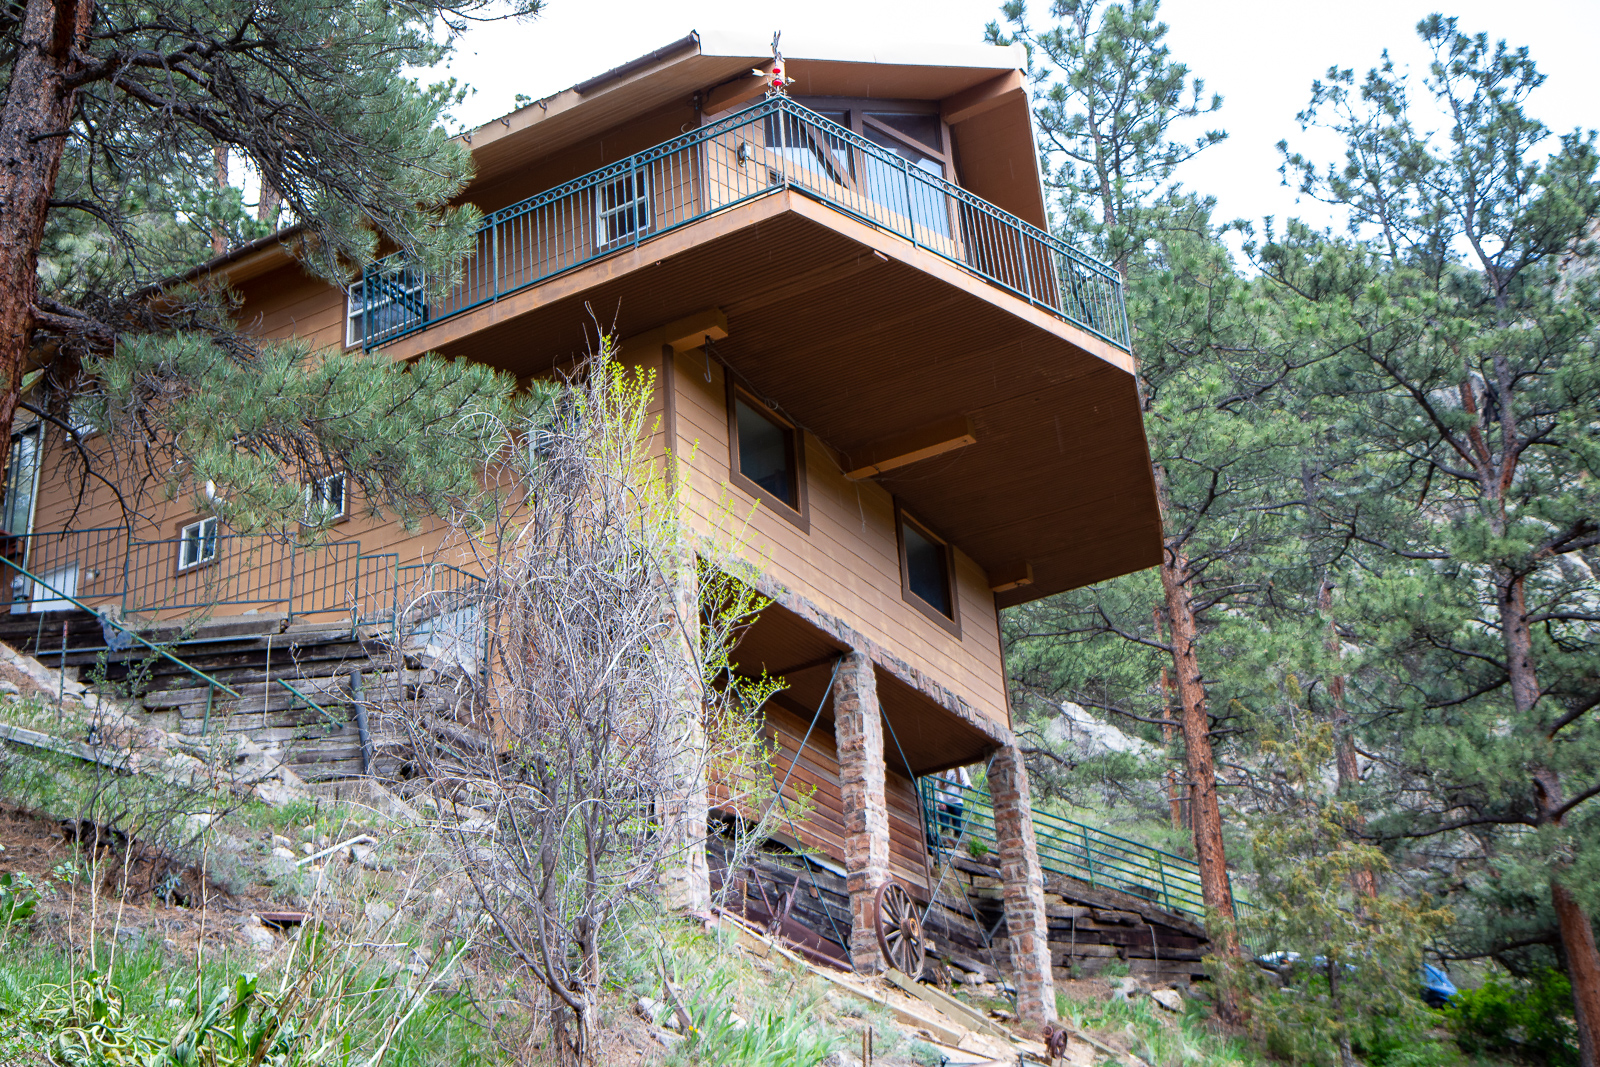 Our Colorado cabin before tour. 